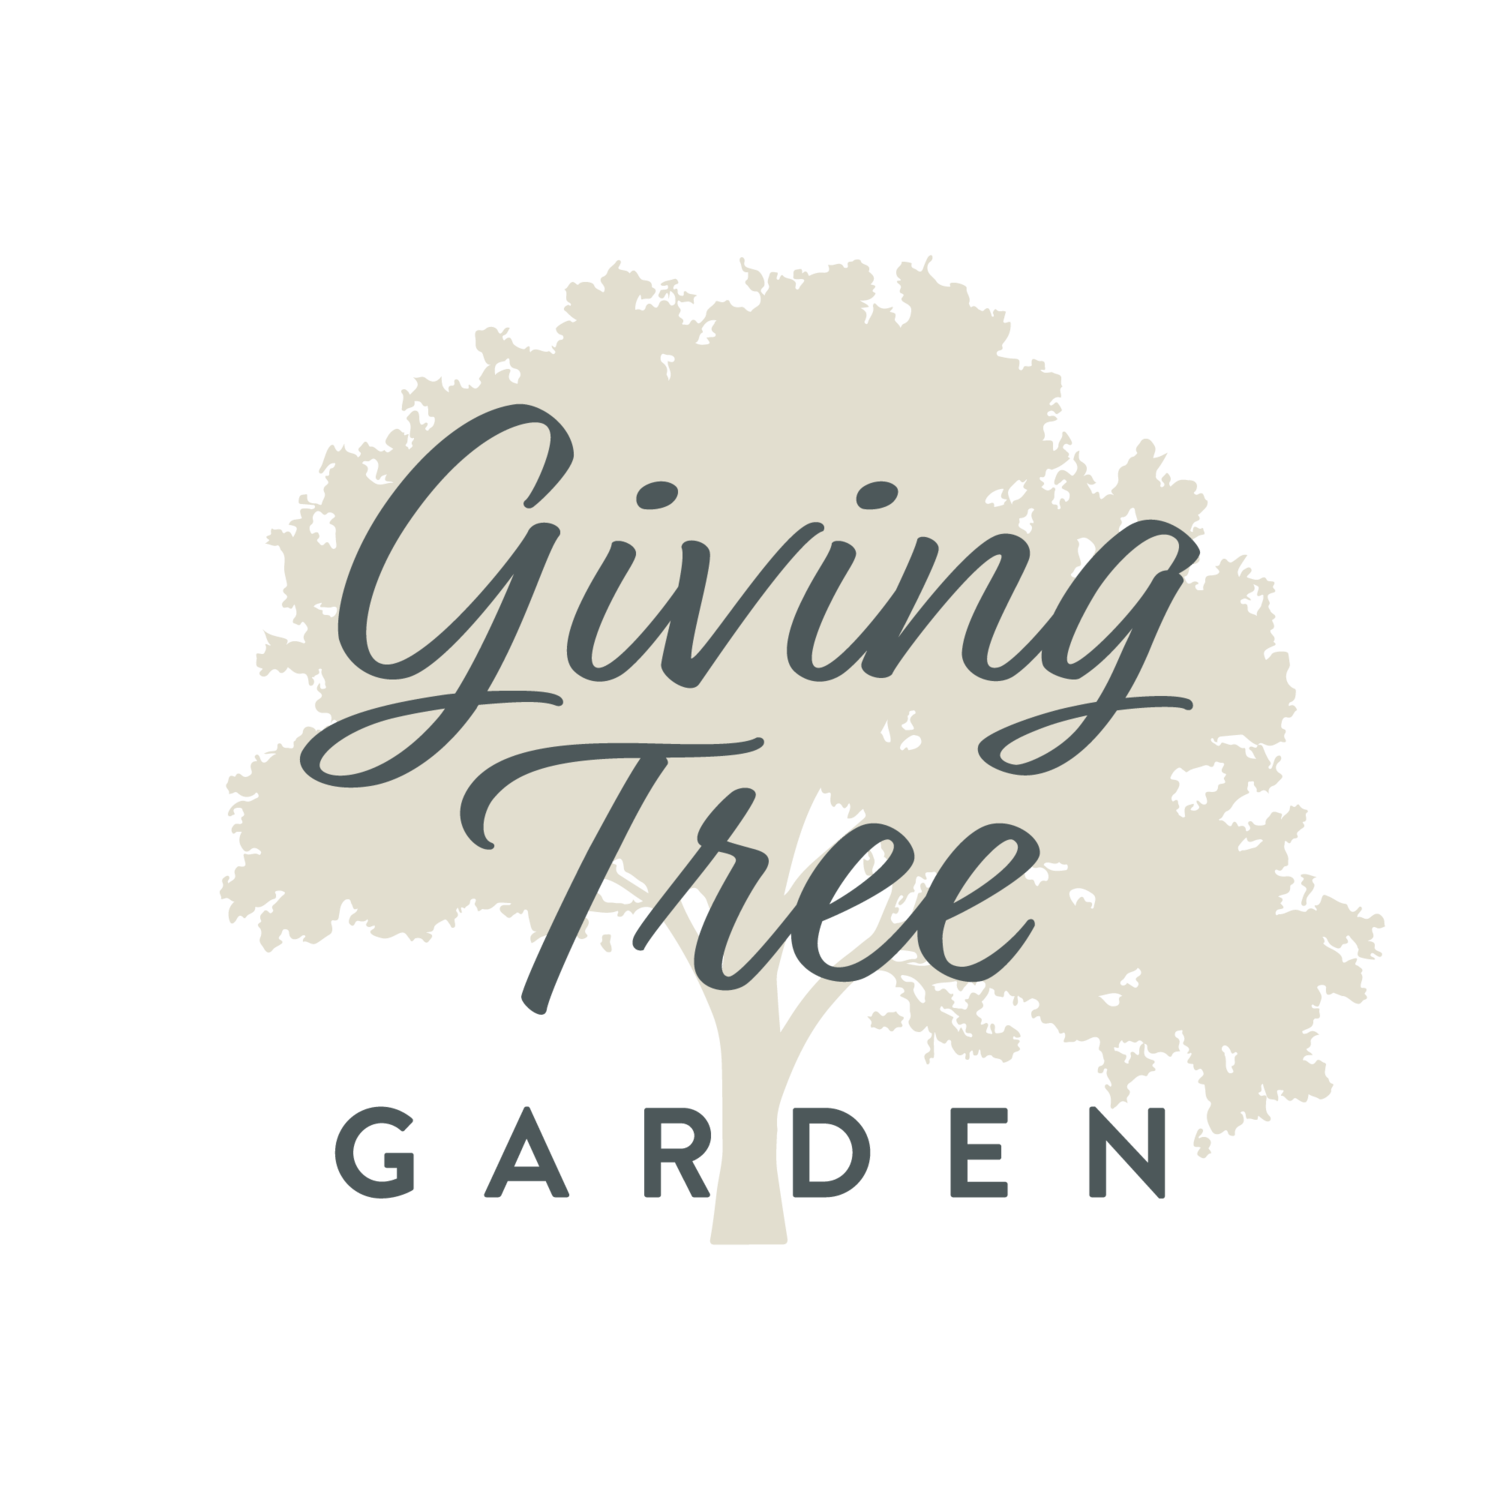 Giving Tree Garden LLC